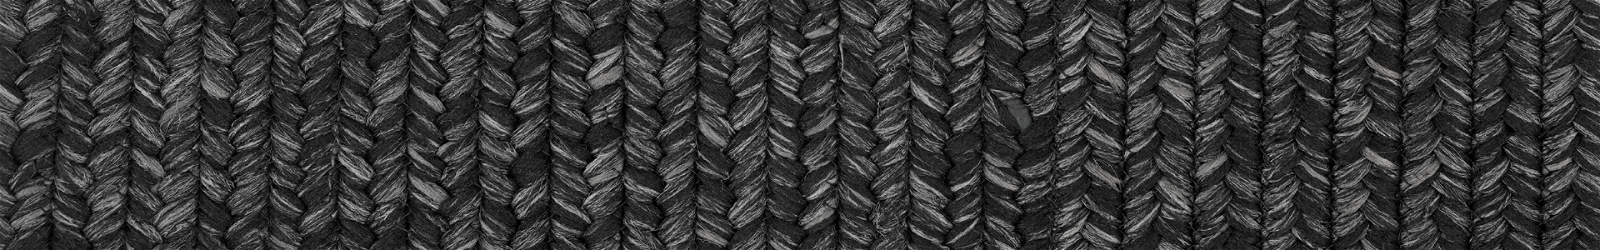 10 x 10 - 2.5 x 6' - Black Braided Rugs